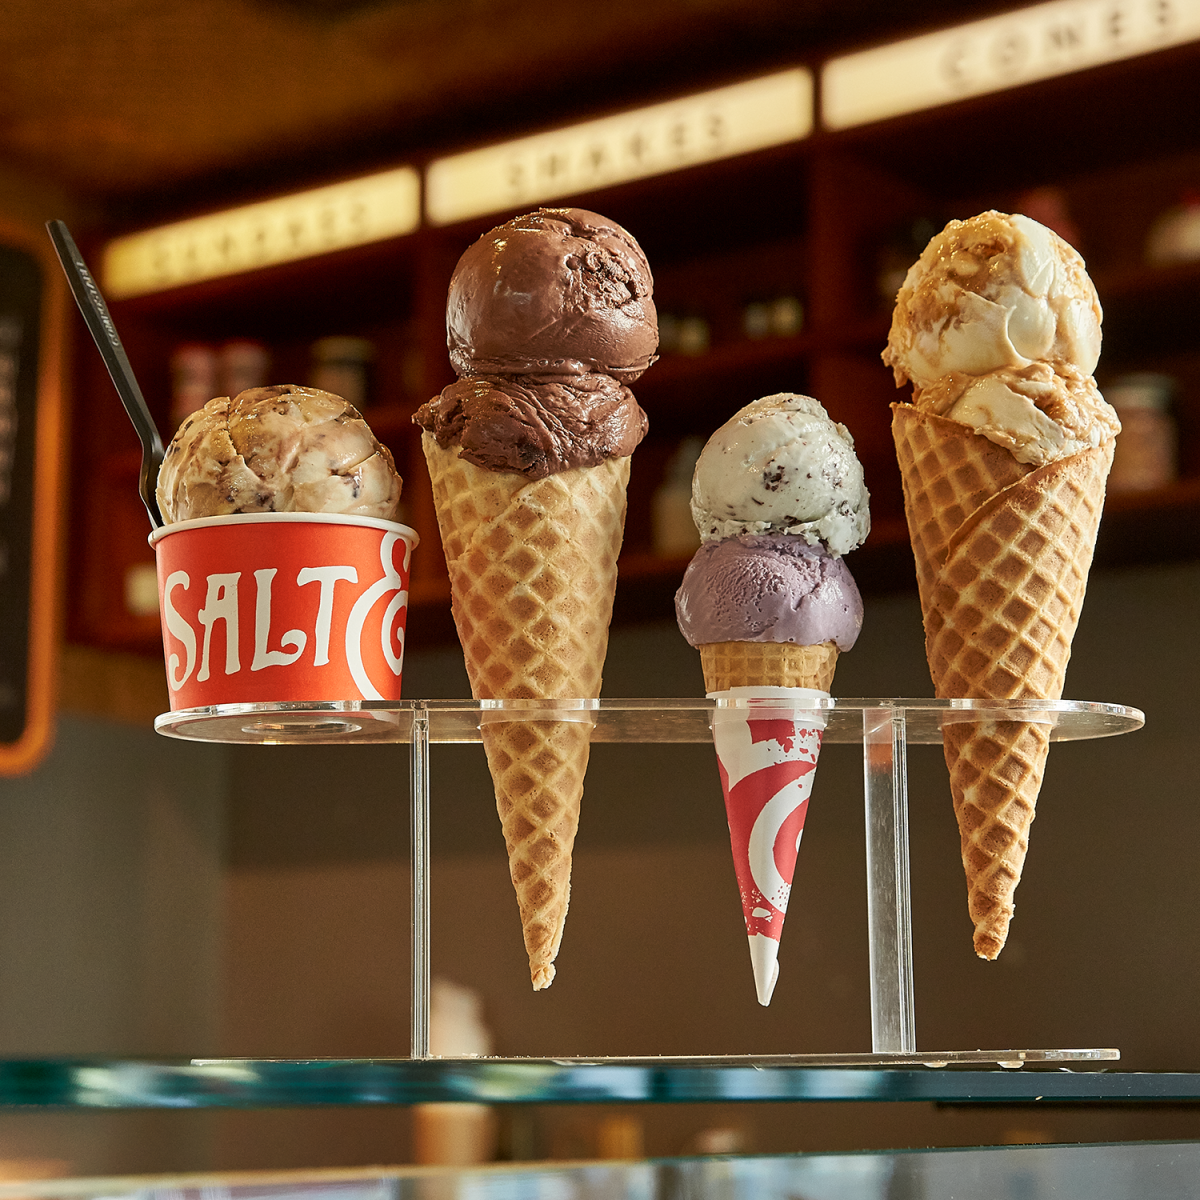 A display of ice cream cones